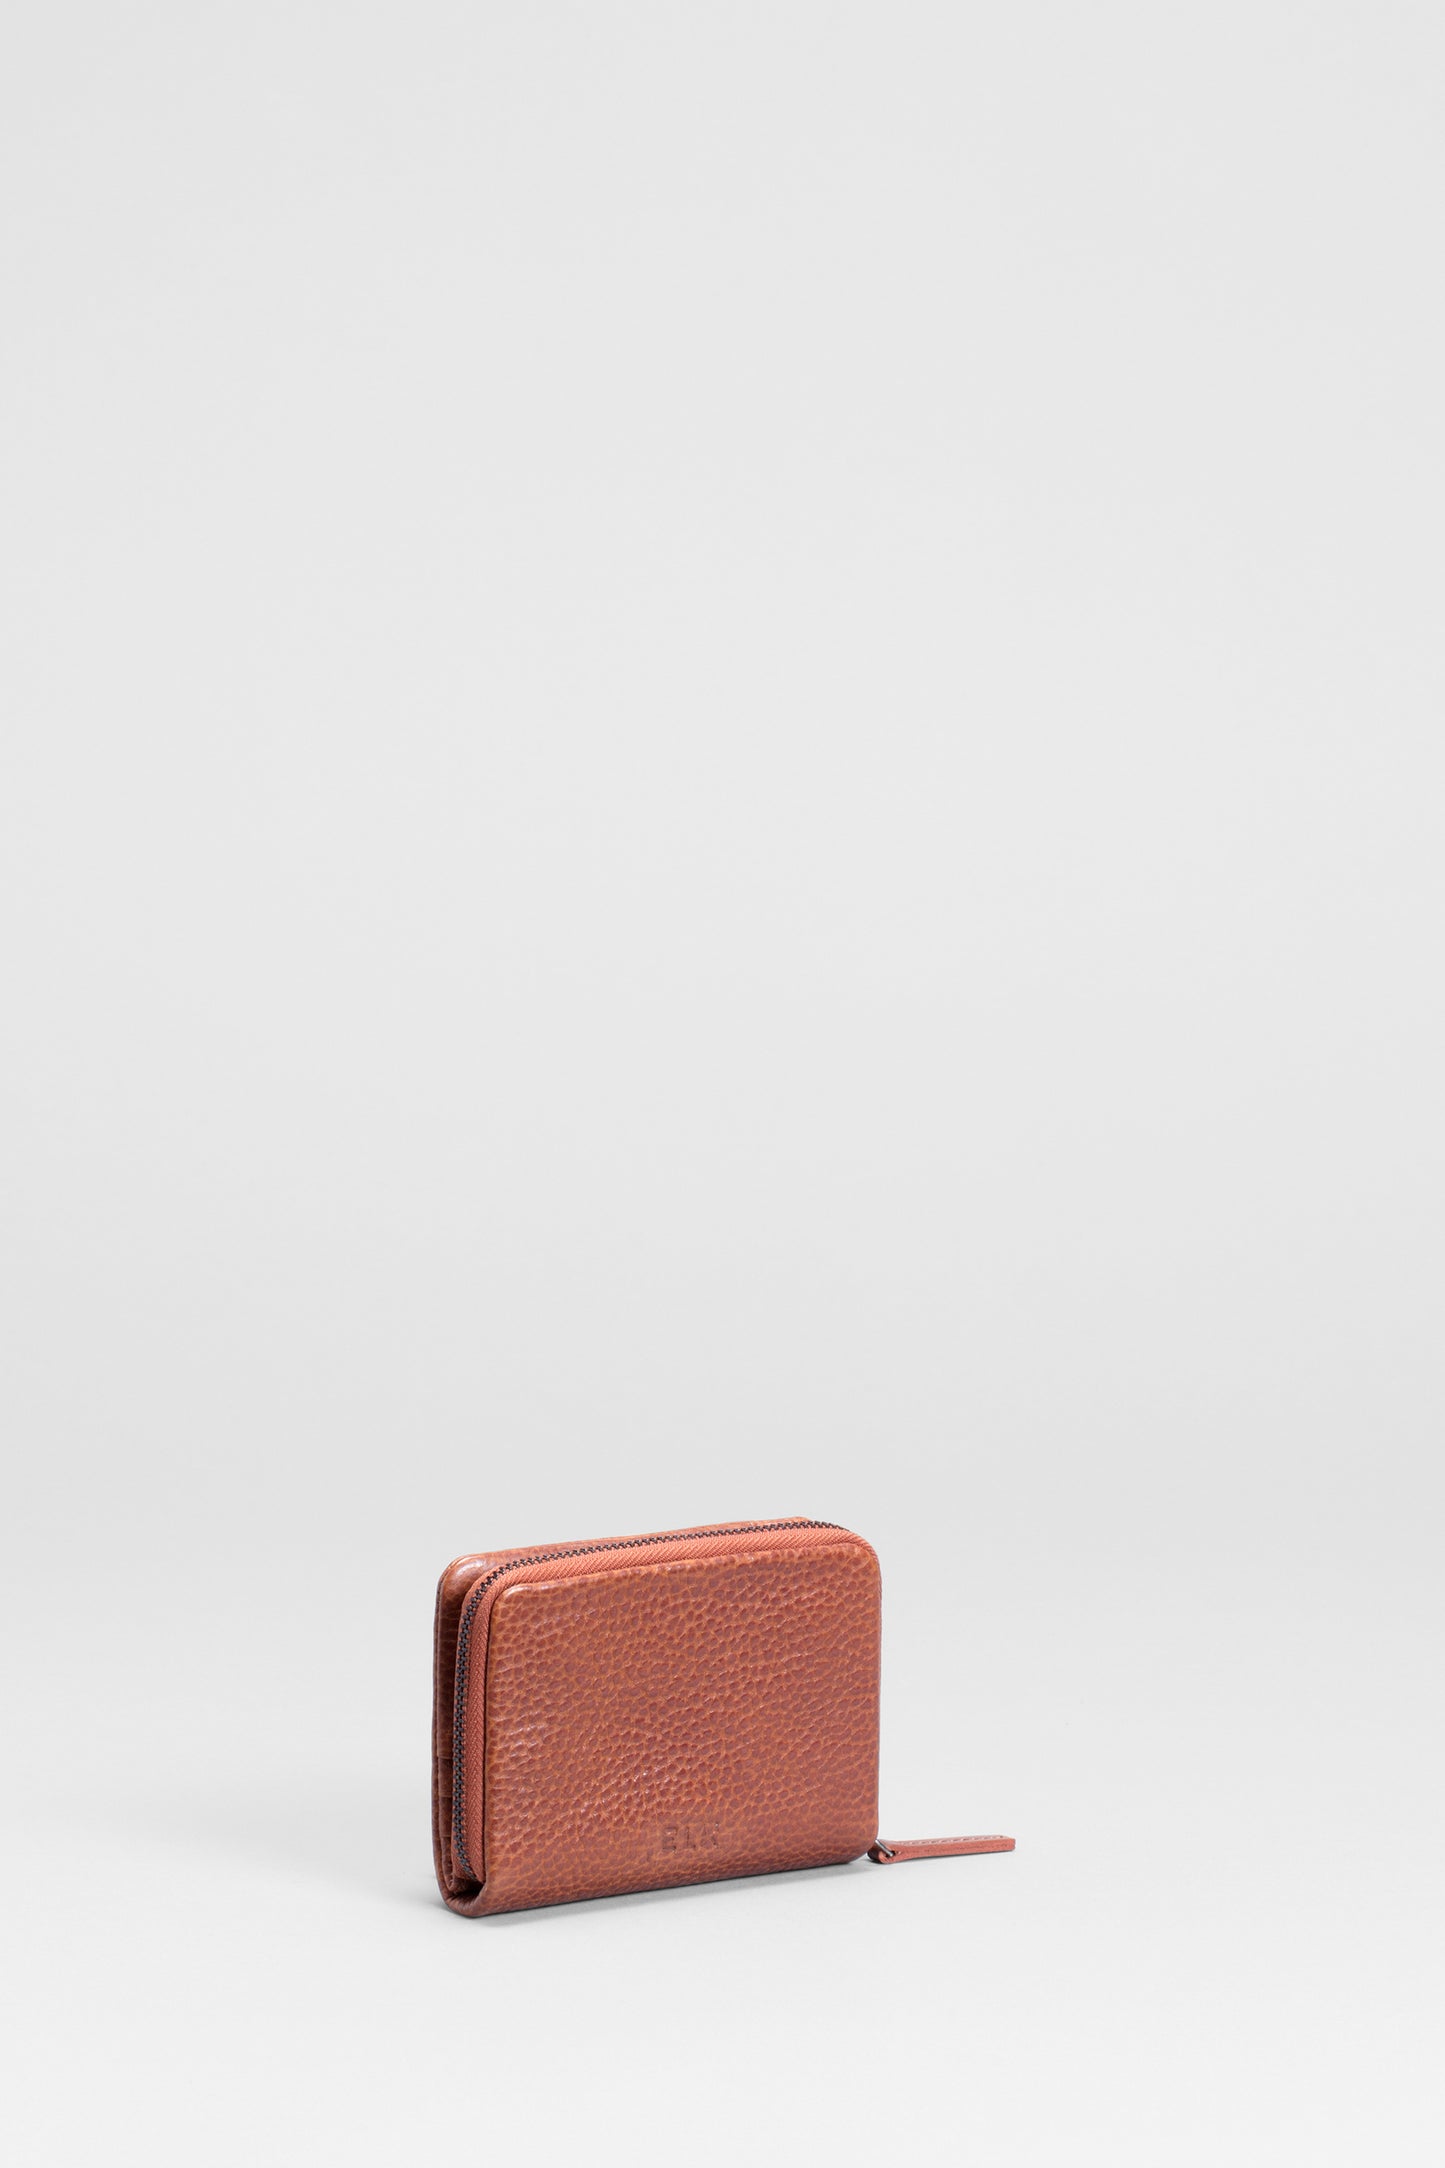 Canutte Leather Wallet Back | TAN / TAN